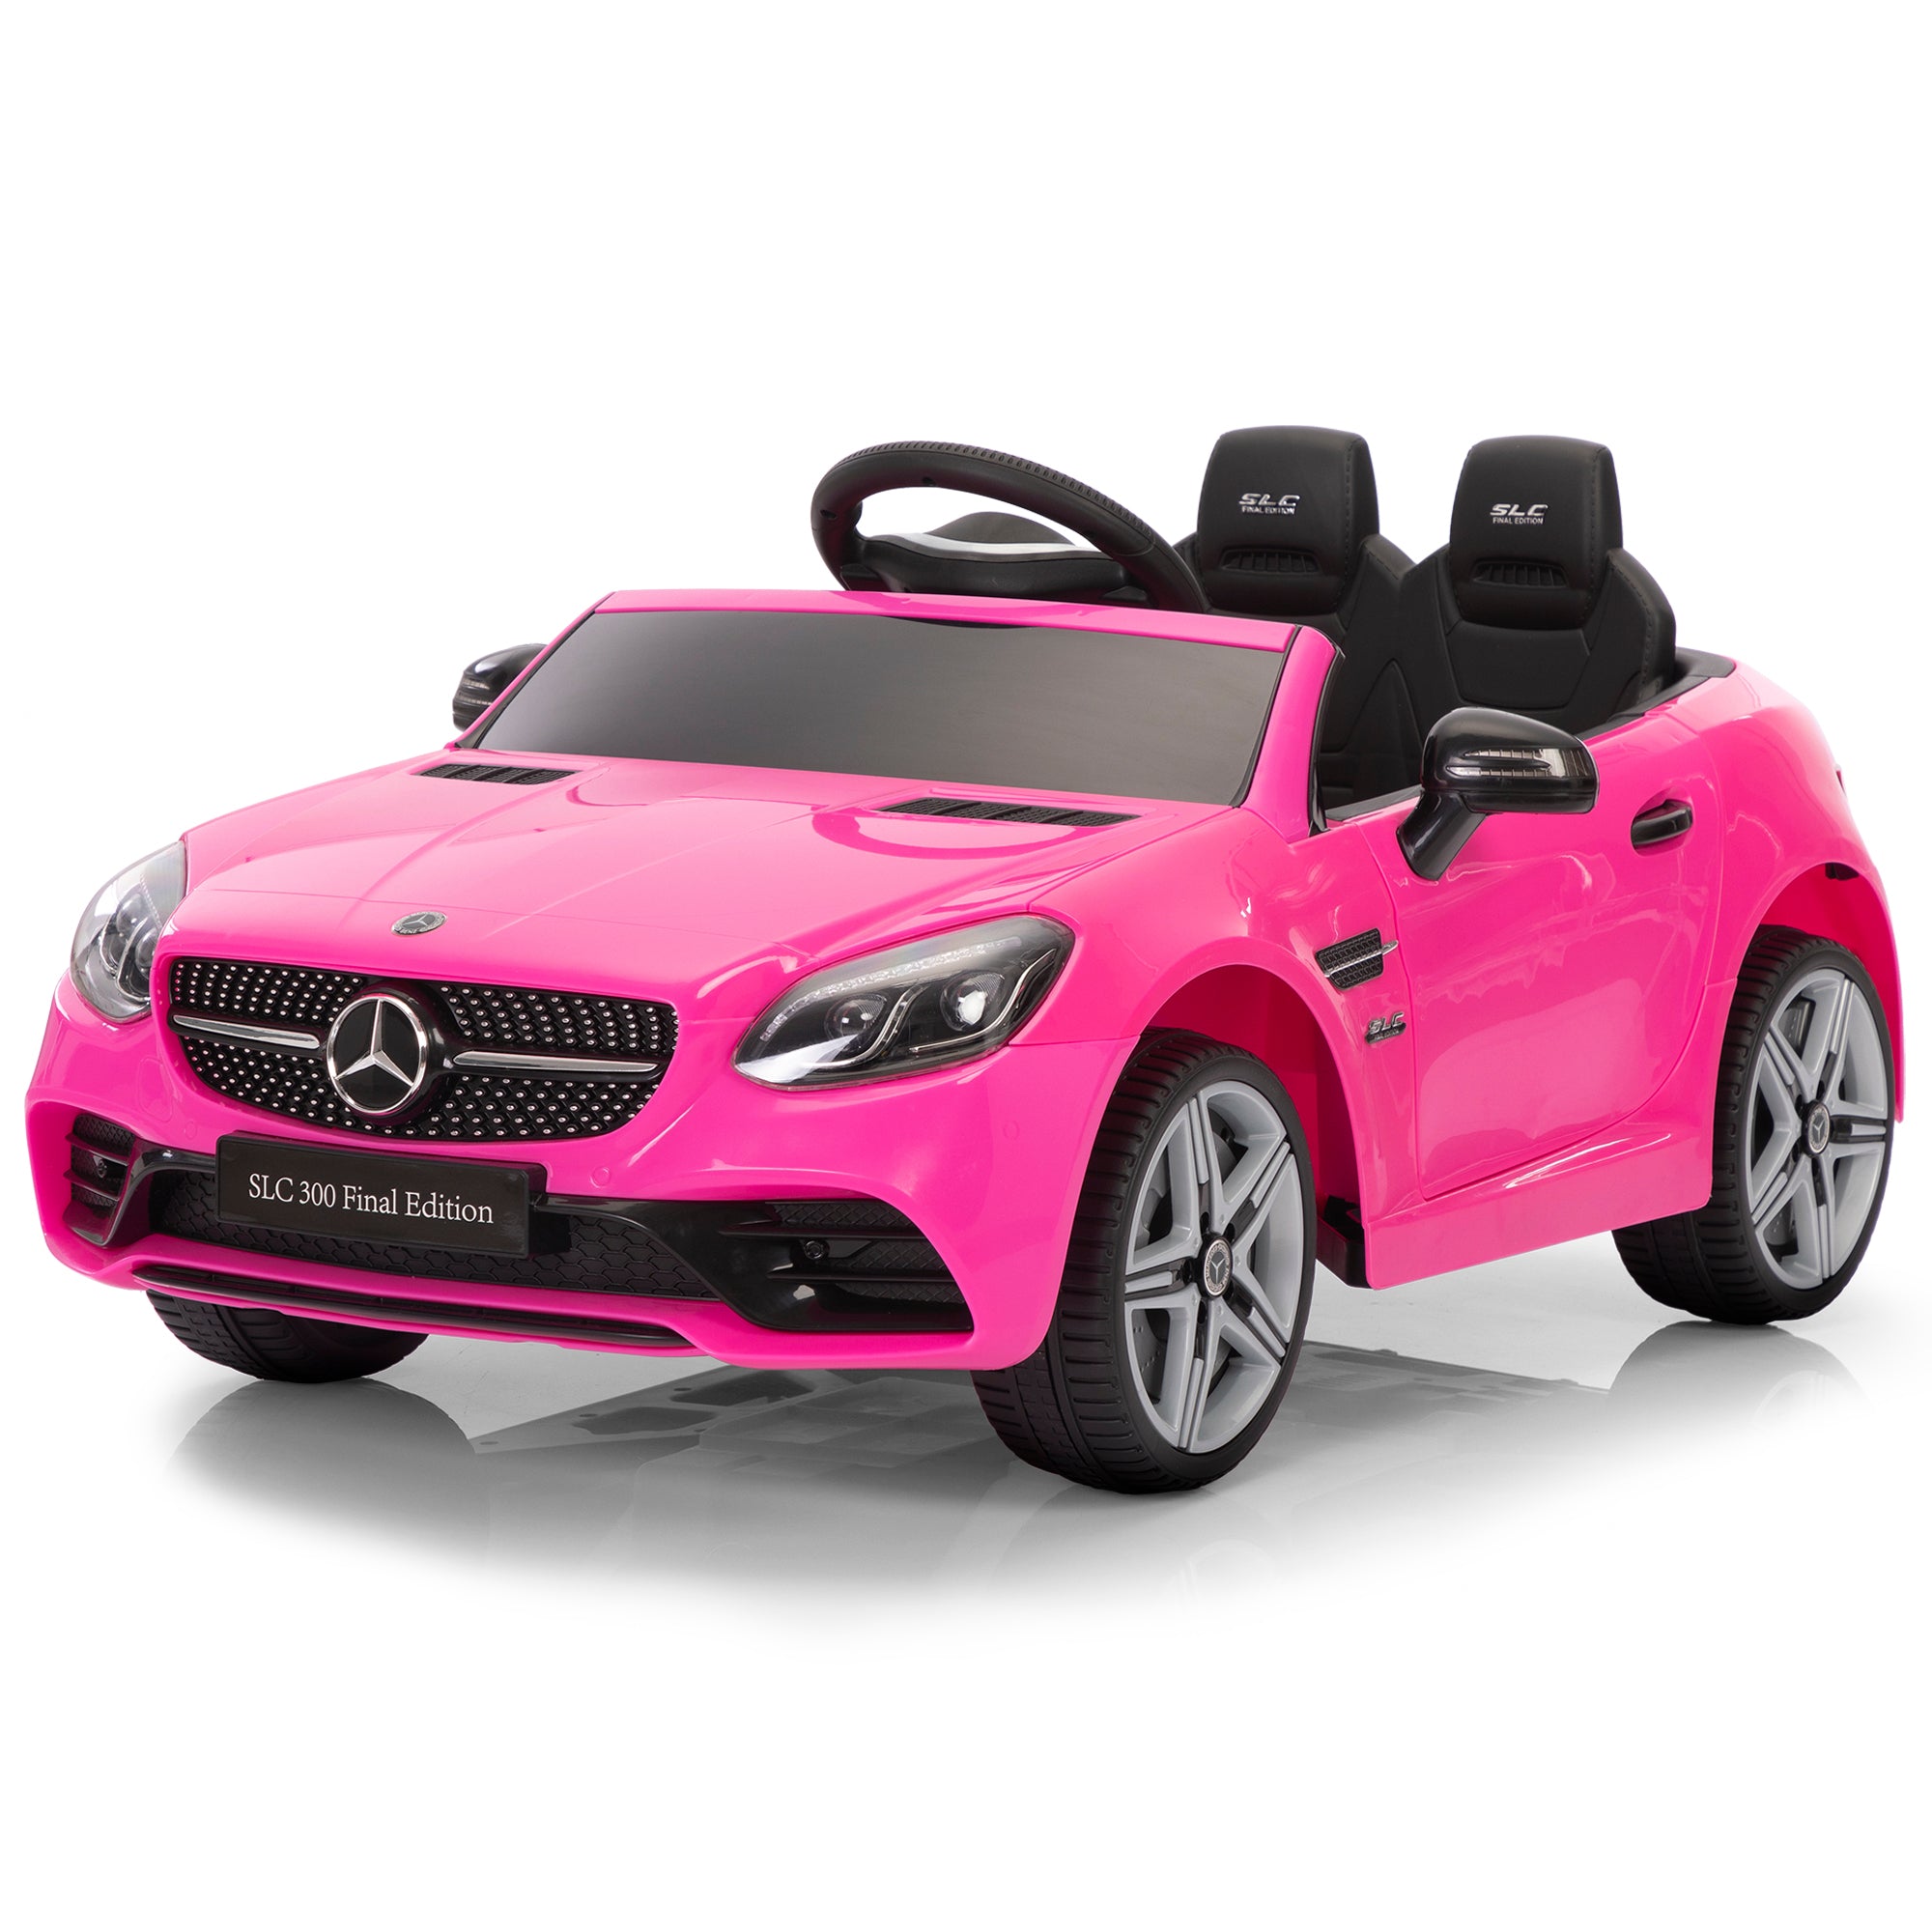 12v Kids Slc300 Ride On Toy Car, Electric Battery